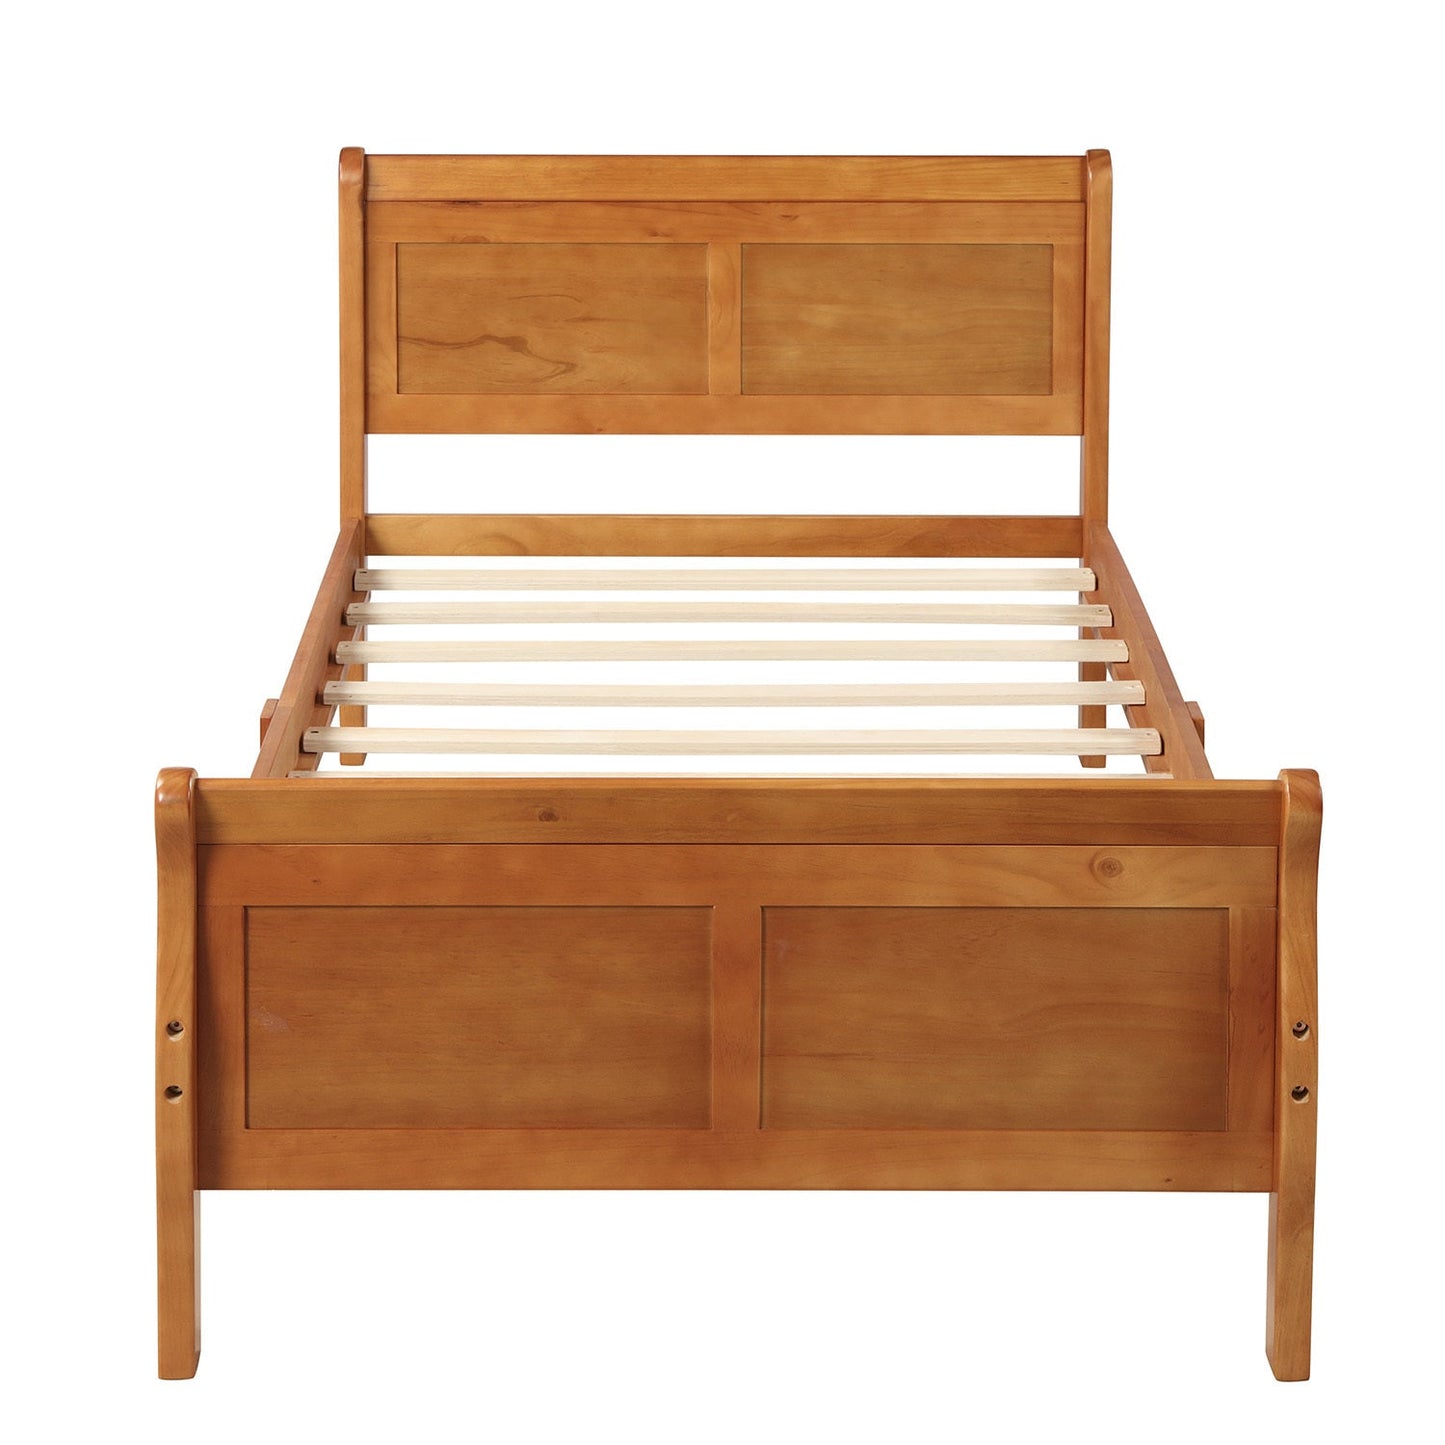 Pescara Wood Platform Bed Twin Bed Frame Mattress Foundation Sleigh Bed